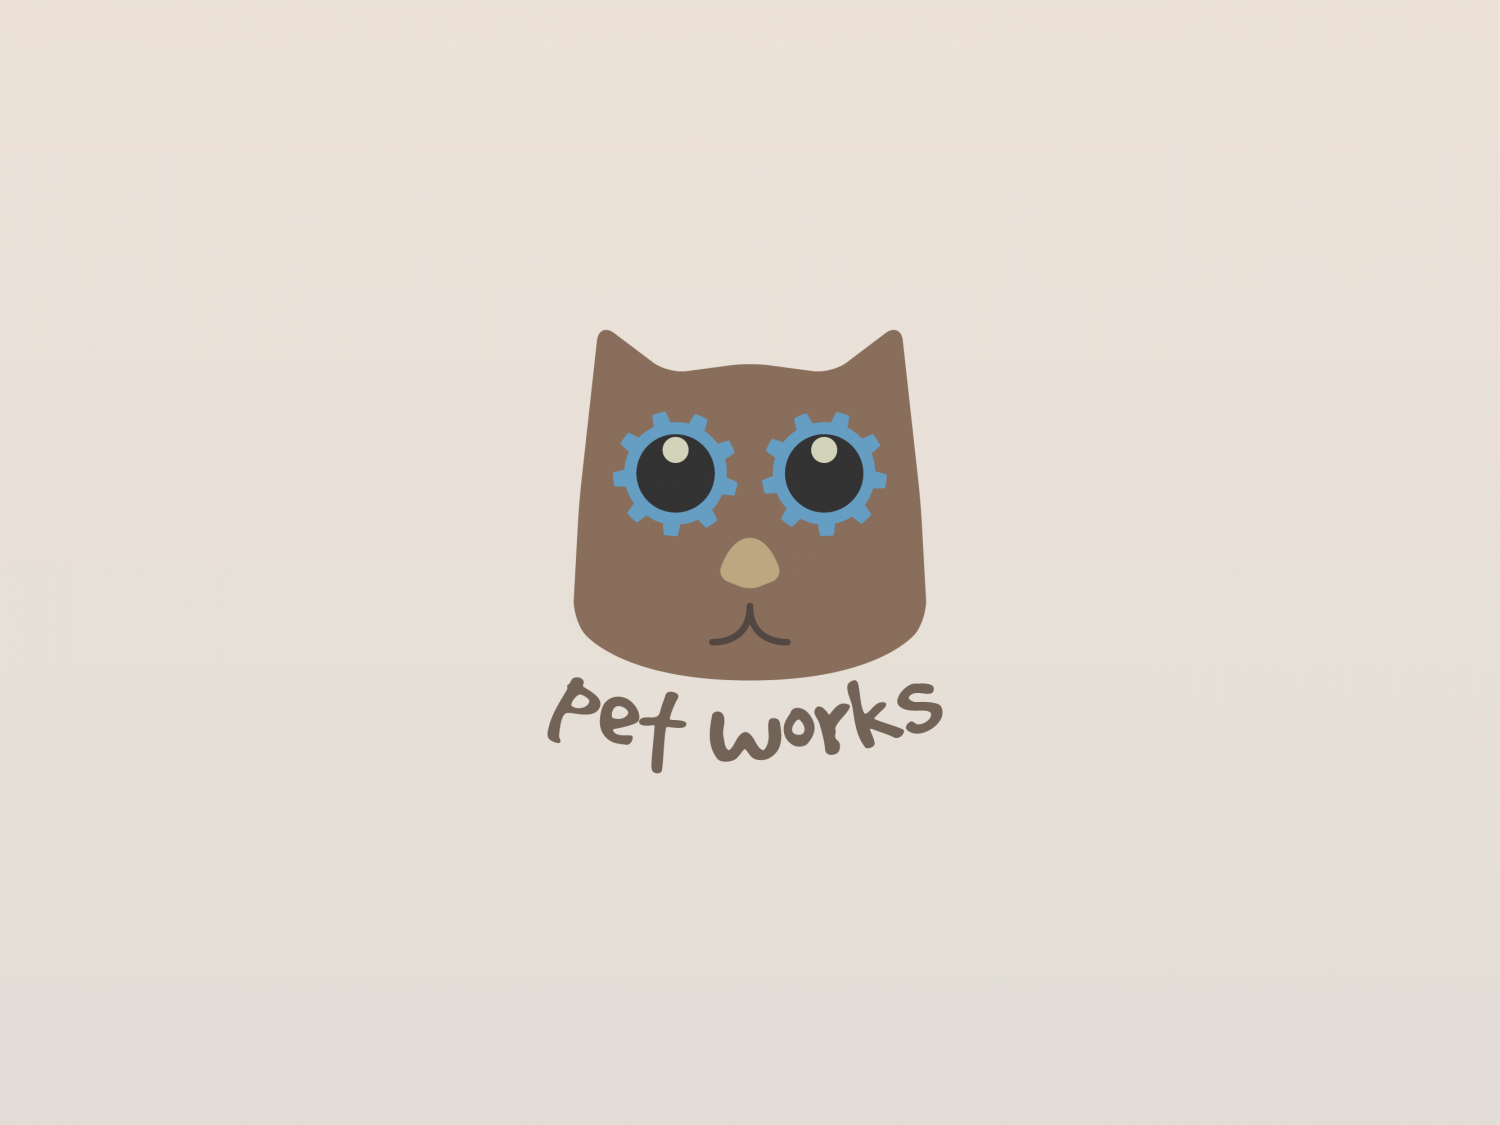 #22 PetWorks